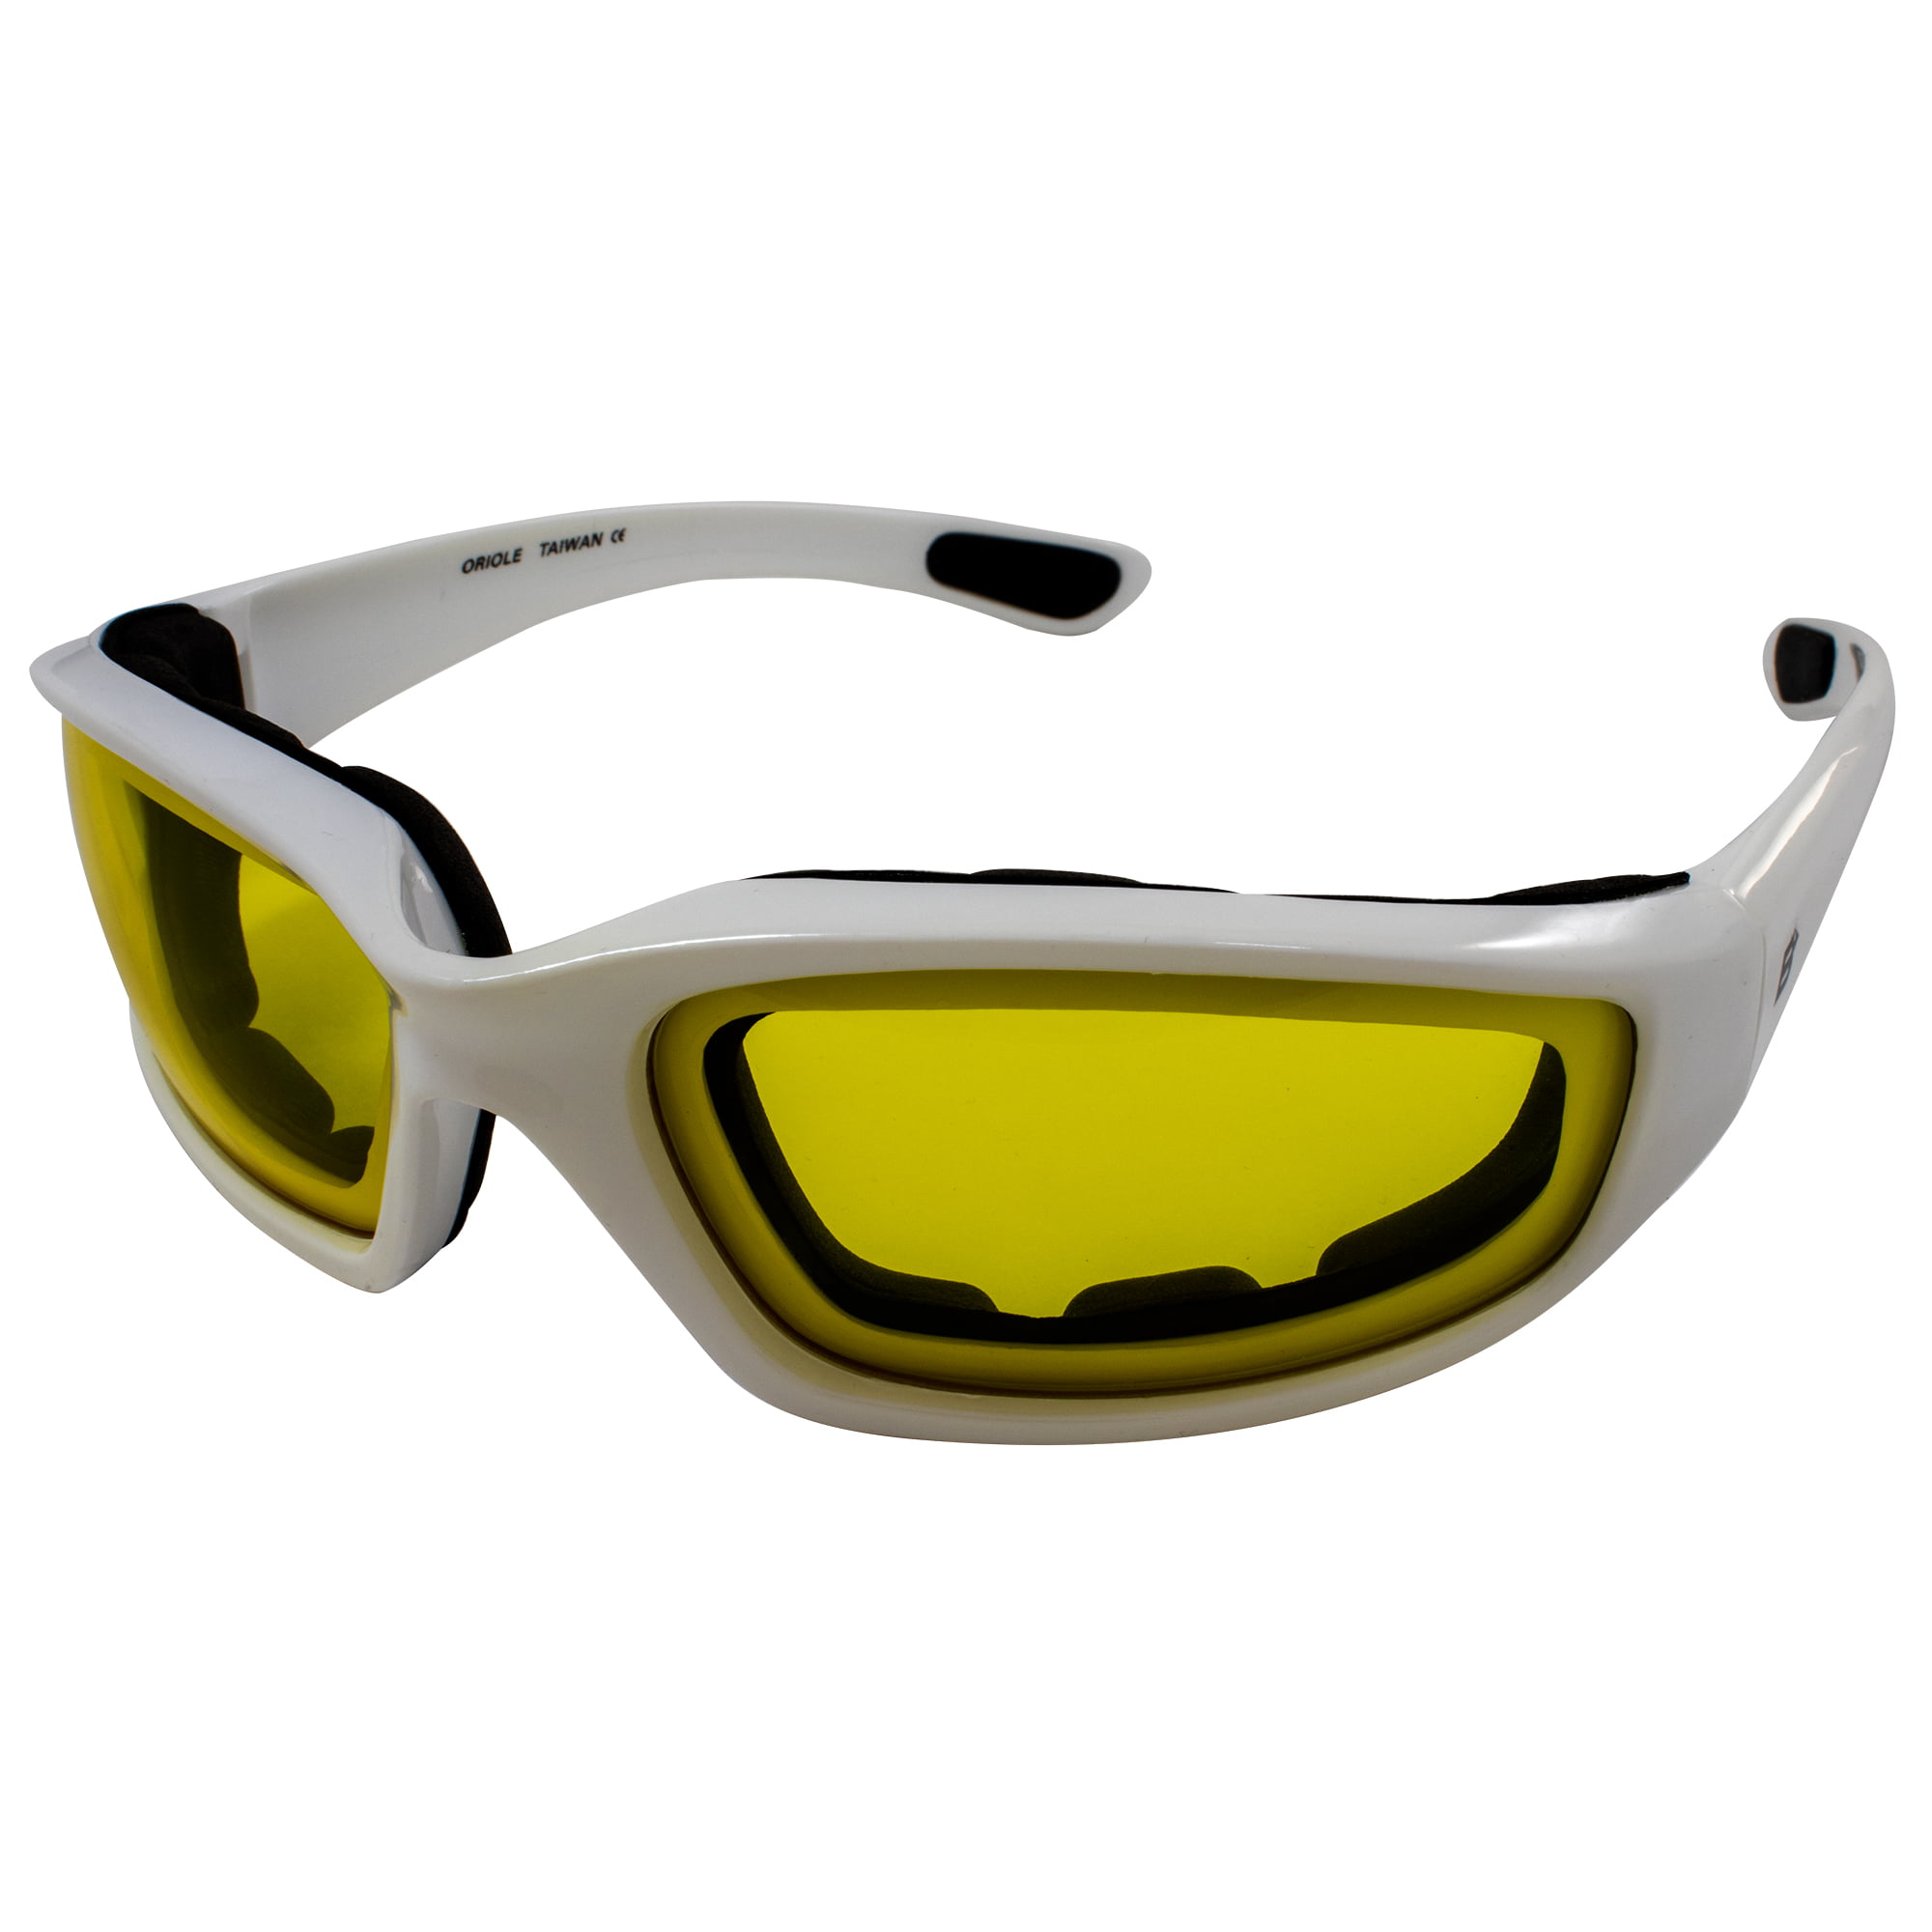 2 Pairs of Birdz Eyewear Boogie Foam Padded Motorcycle Ski Skydiving Z87.1 Safety Goggles Black Frames with Smoke & Yellow Anti-Fog Lenses 